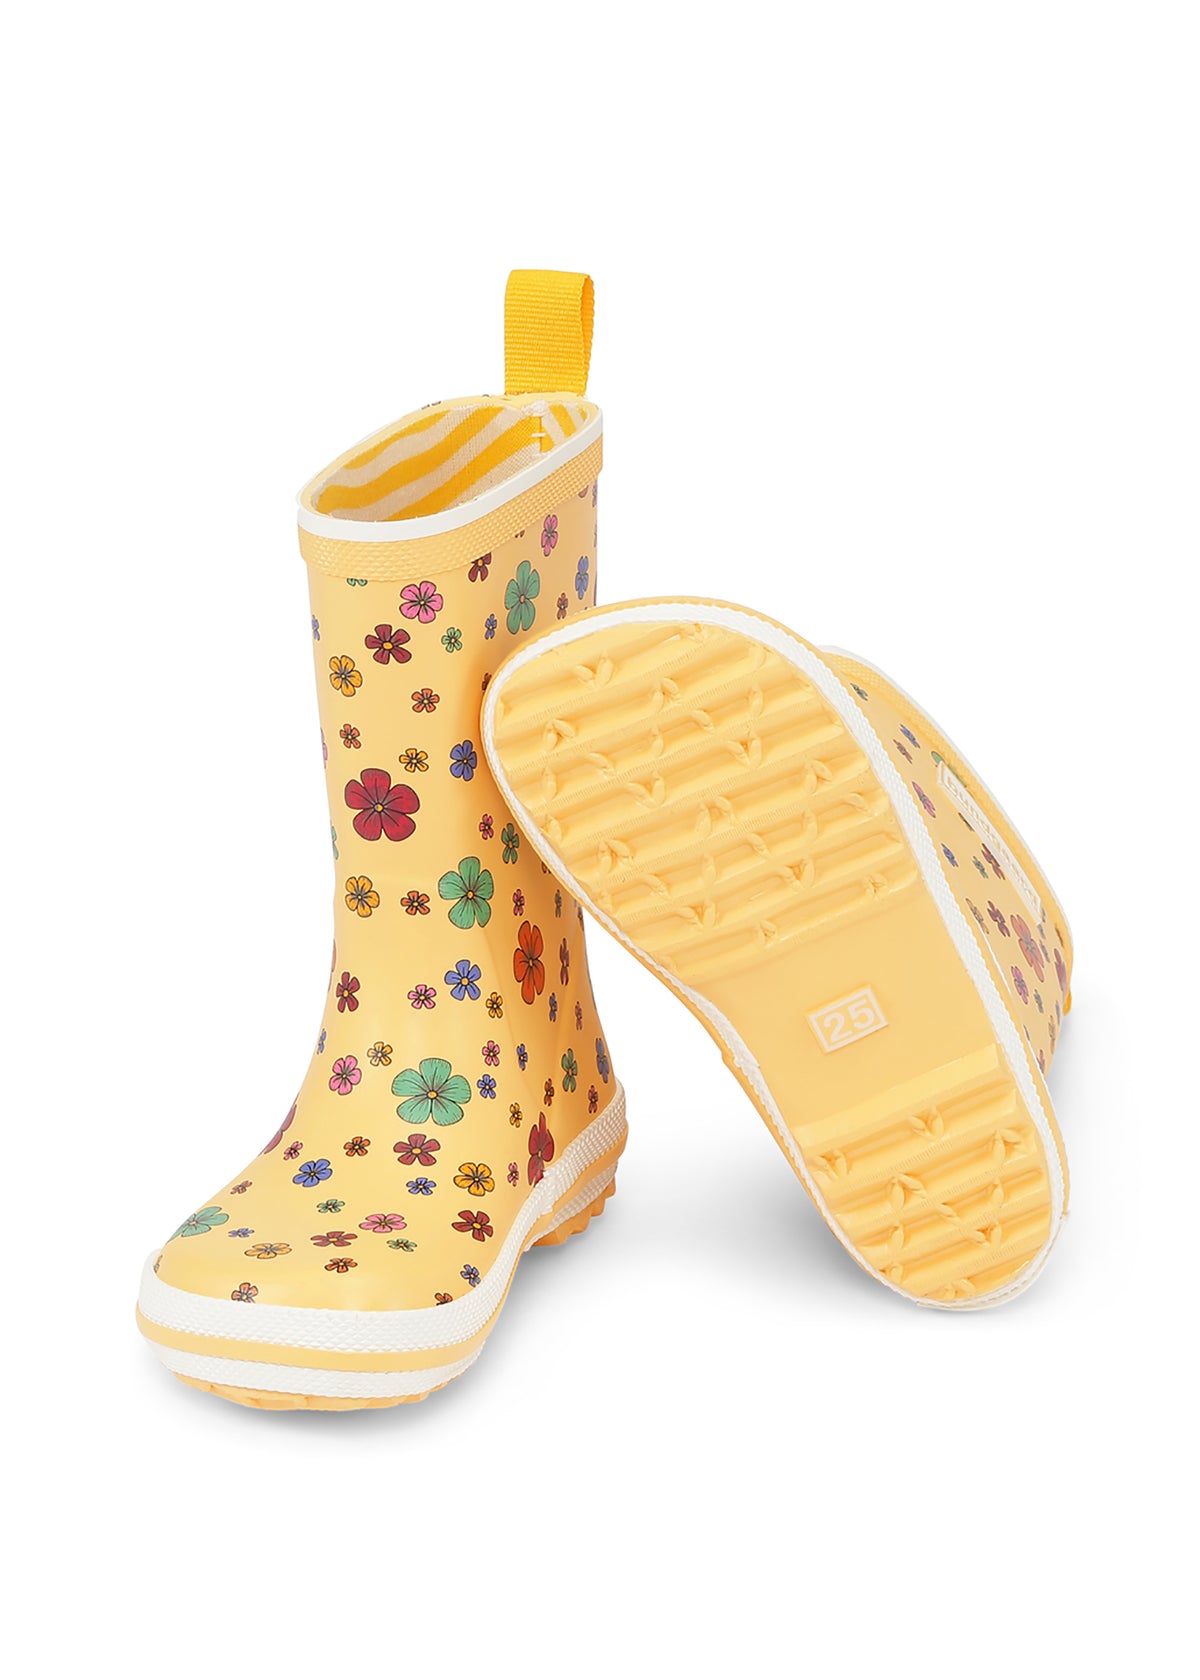 Rubber boots - Cosmos Flower, flowers on a yellow base, Bundgaard Zero Heel